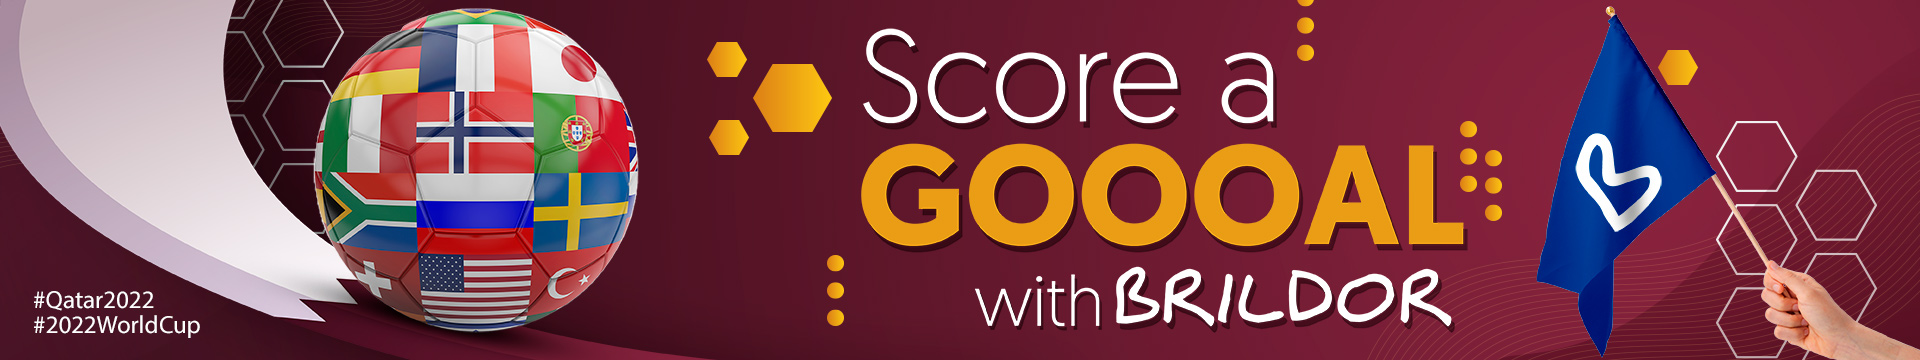 Score a goal with Brildor